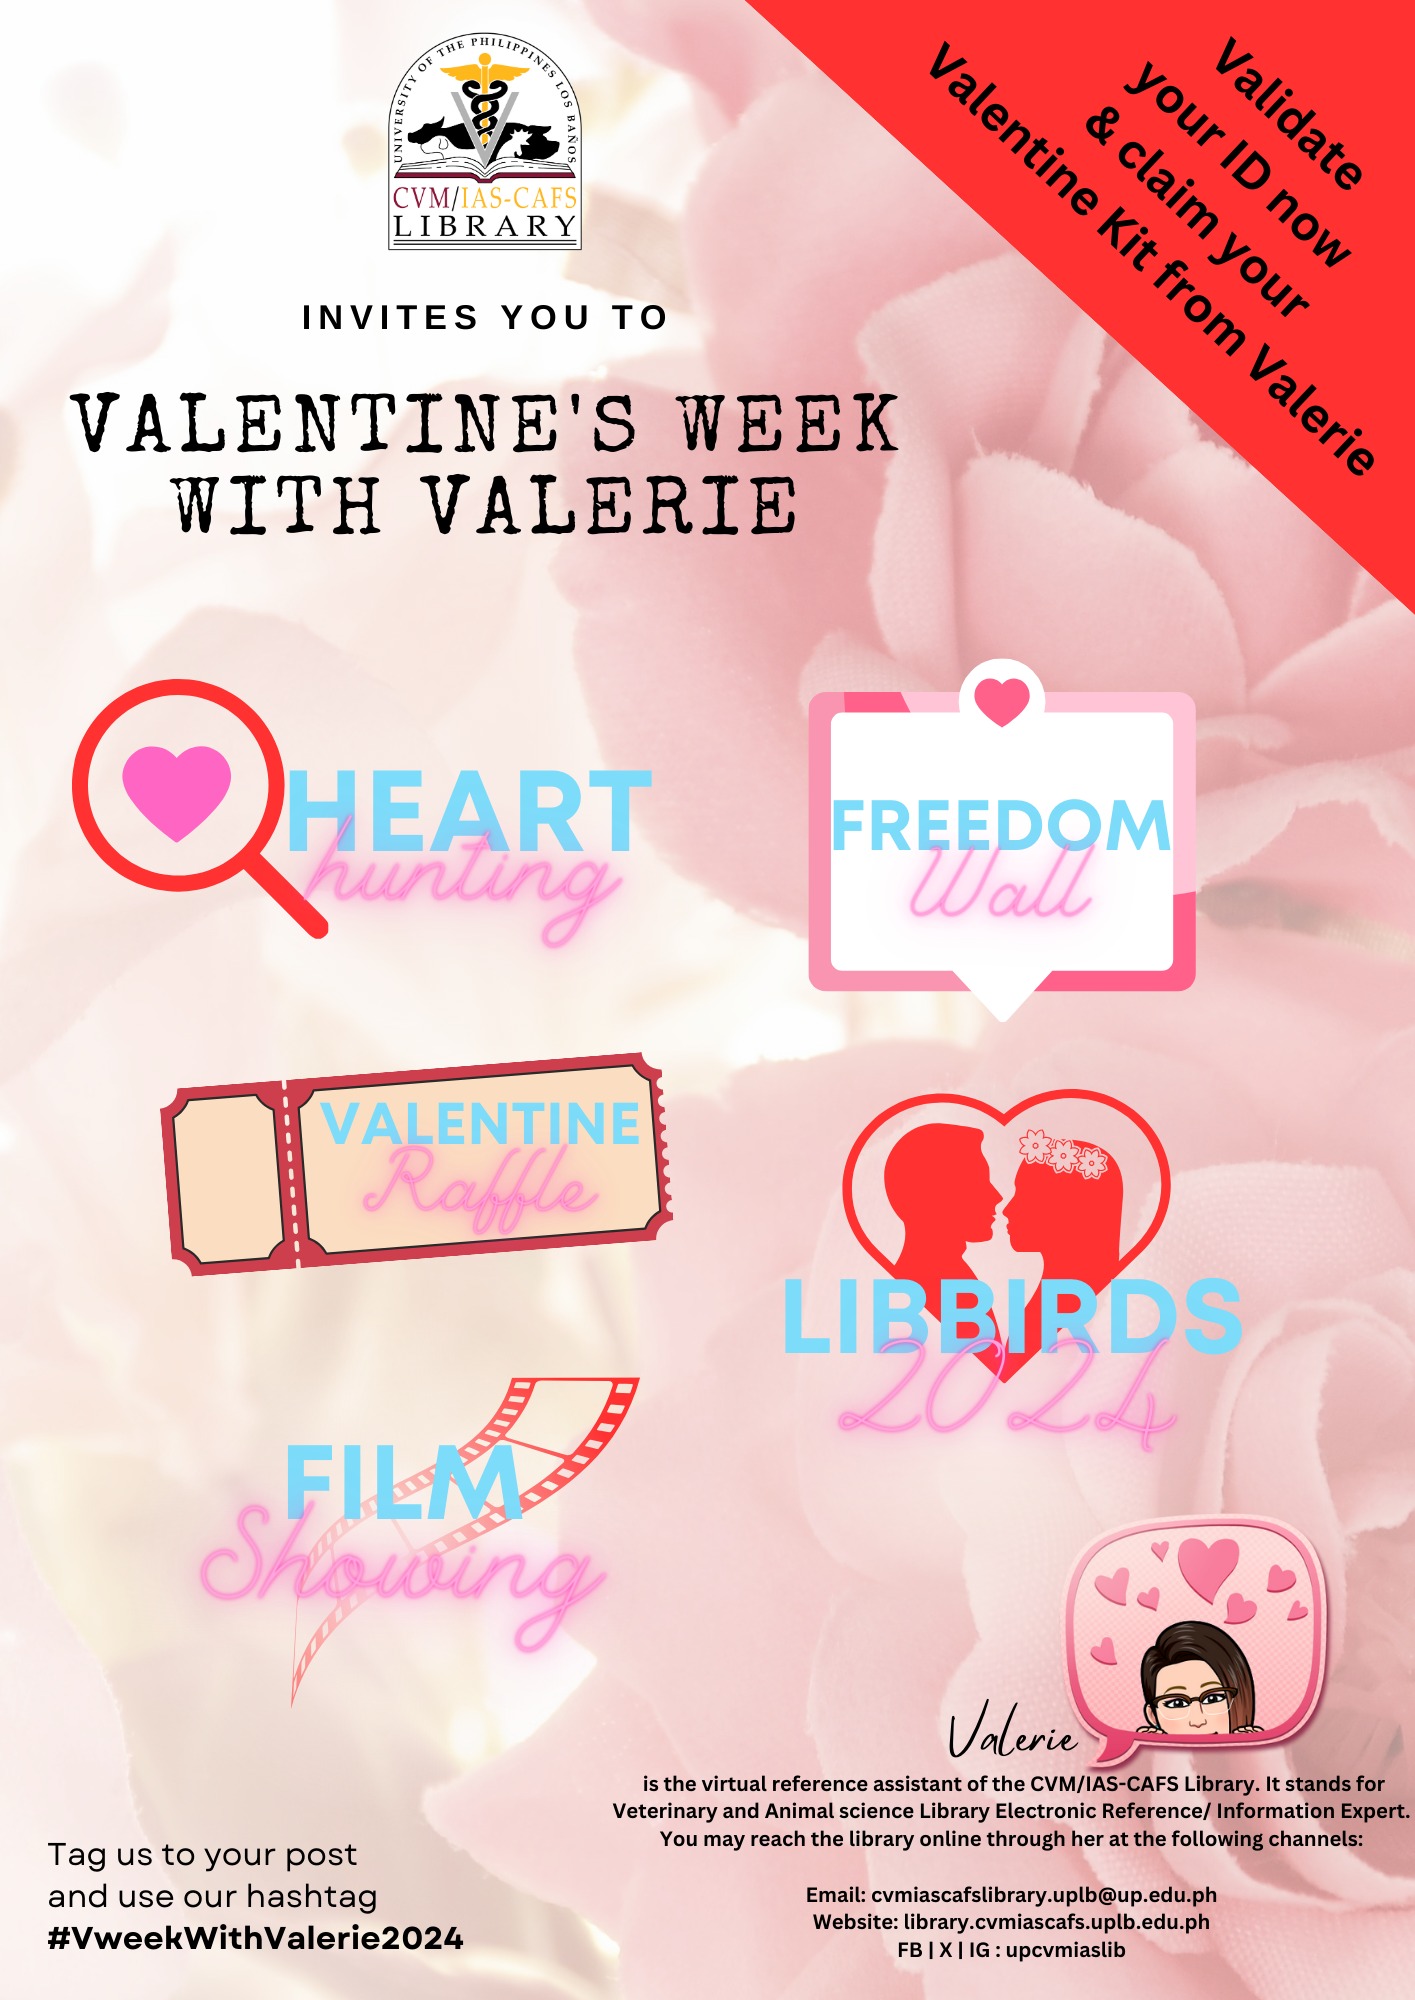 Celebrating Valentine’s Week with Valerie